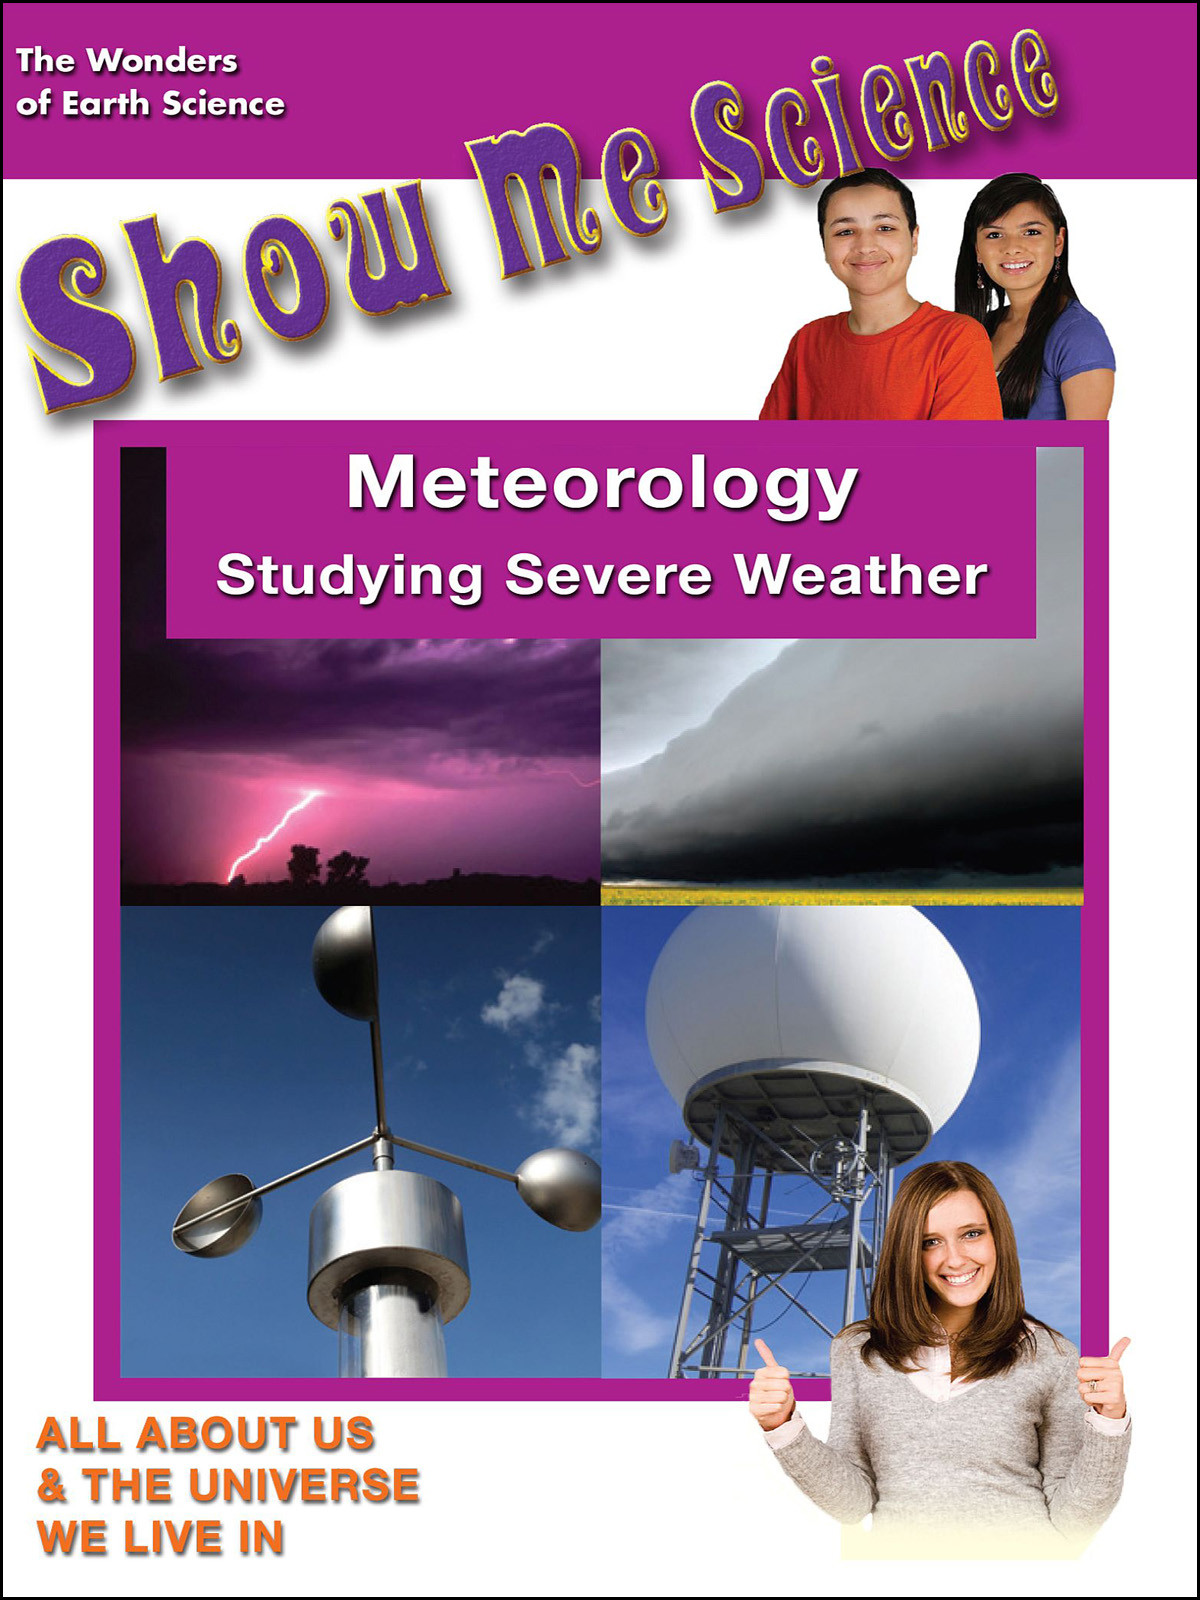 K4614 - Meteorology Studying Severe Weather